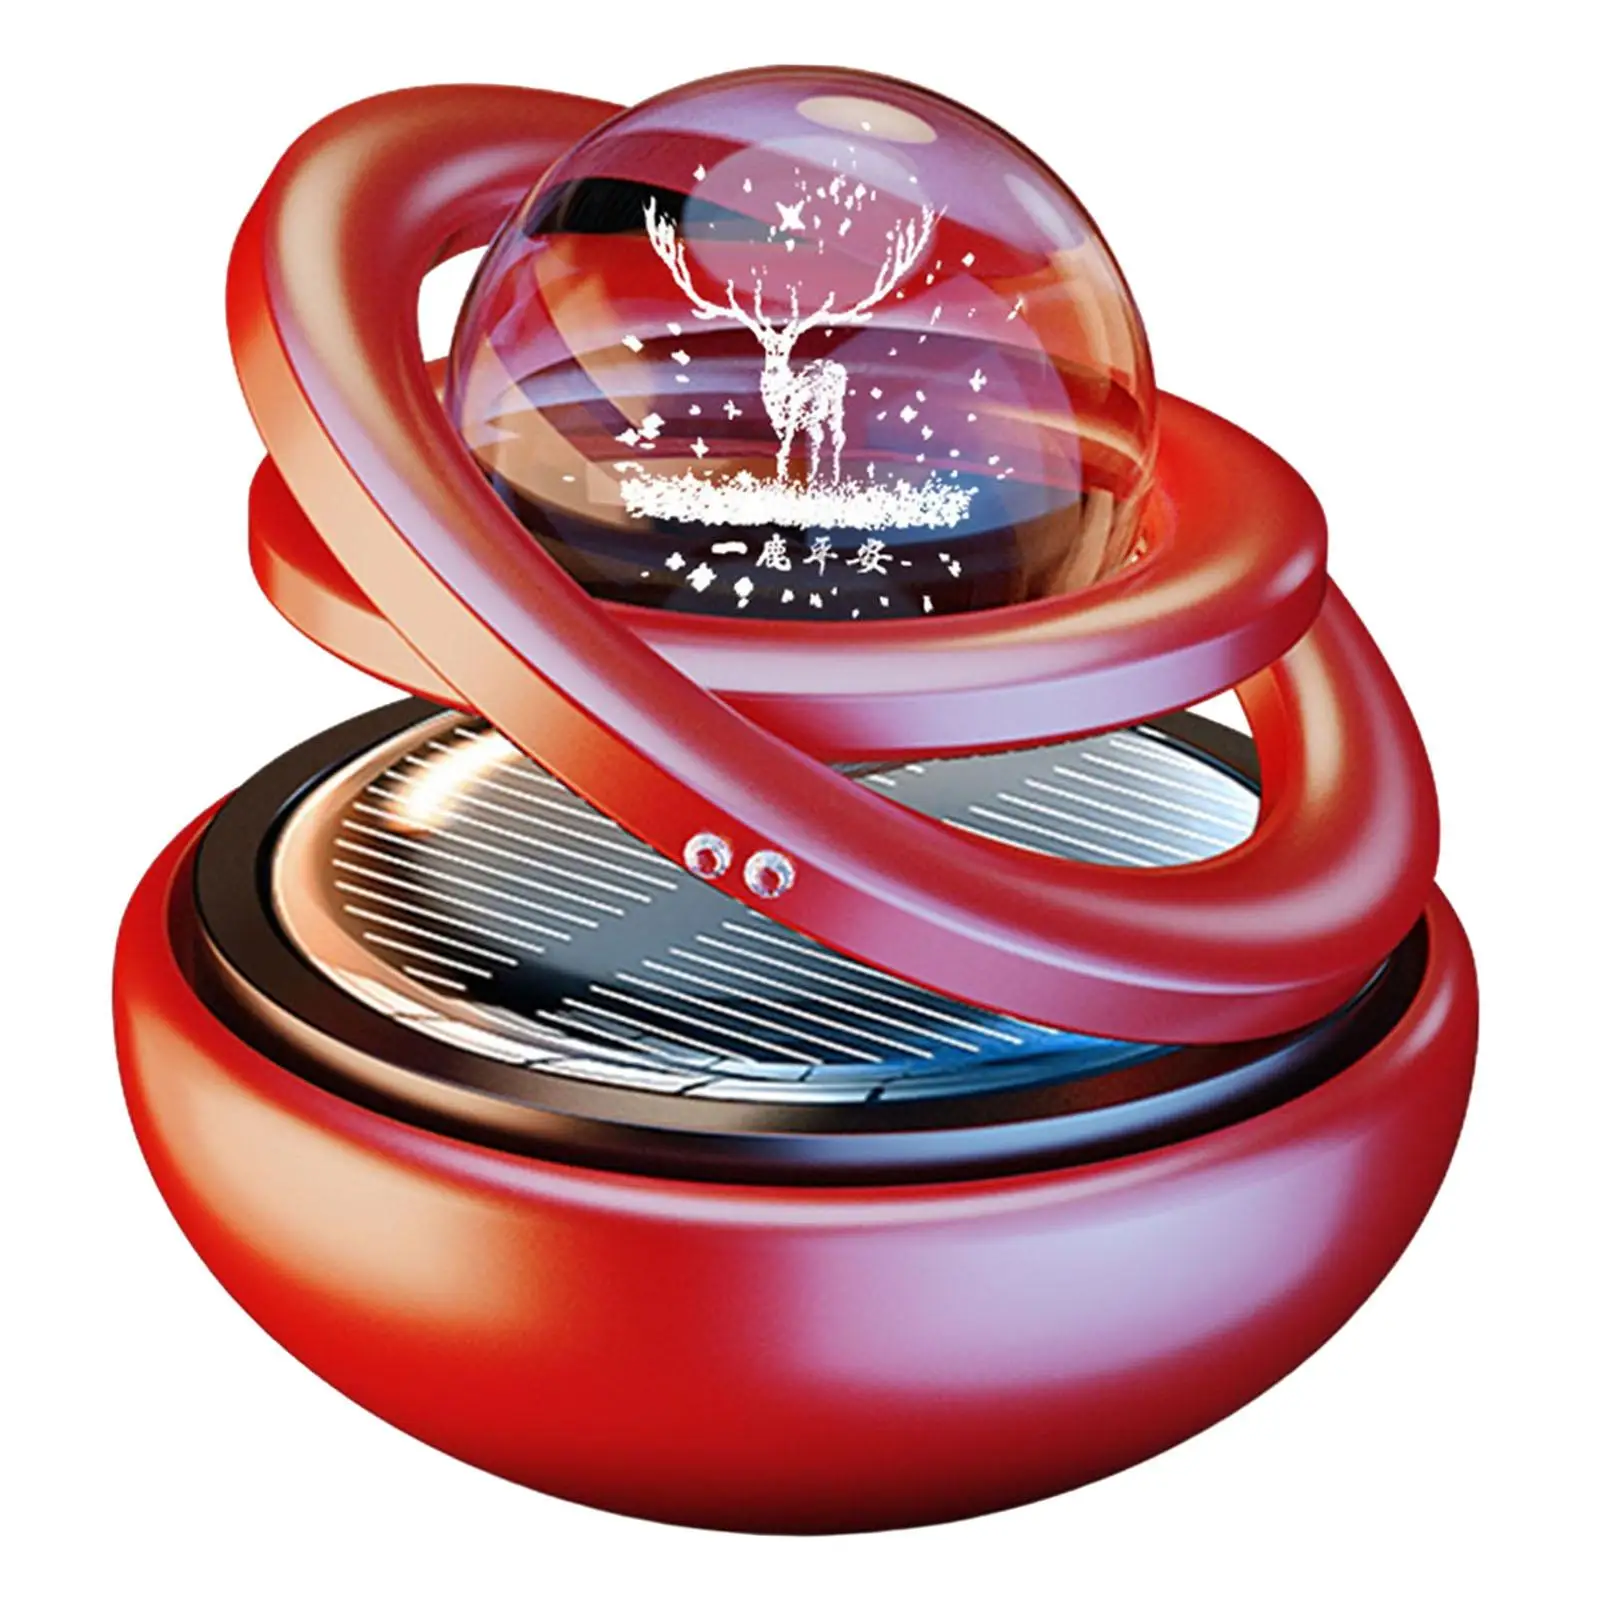 Solar Powered Car Air Freshener Rotating Car Perfume Diffuser with Ball for Desktop Home Vehicle Decor Ornament